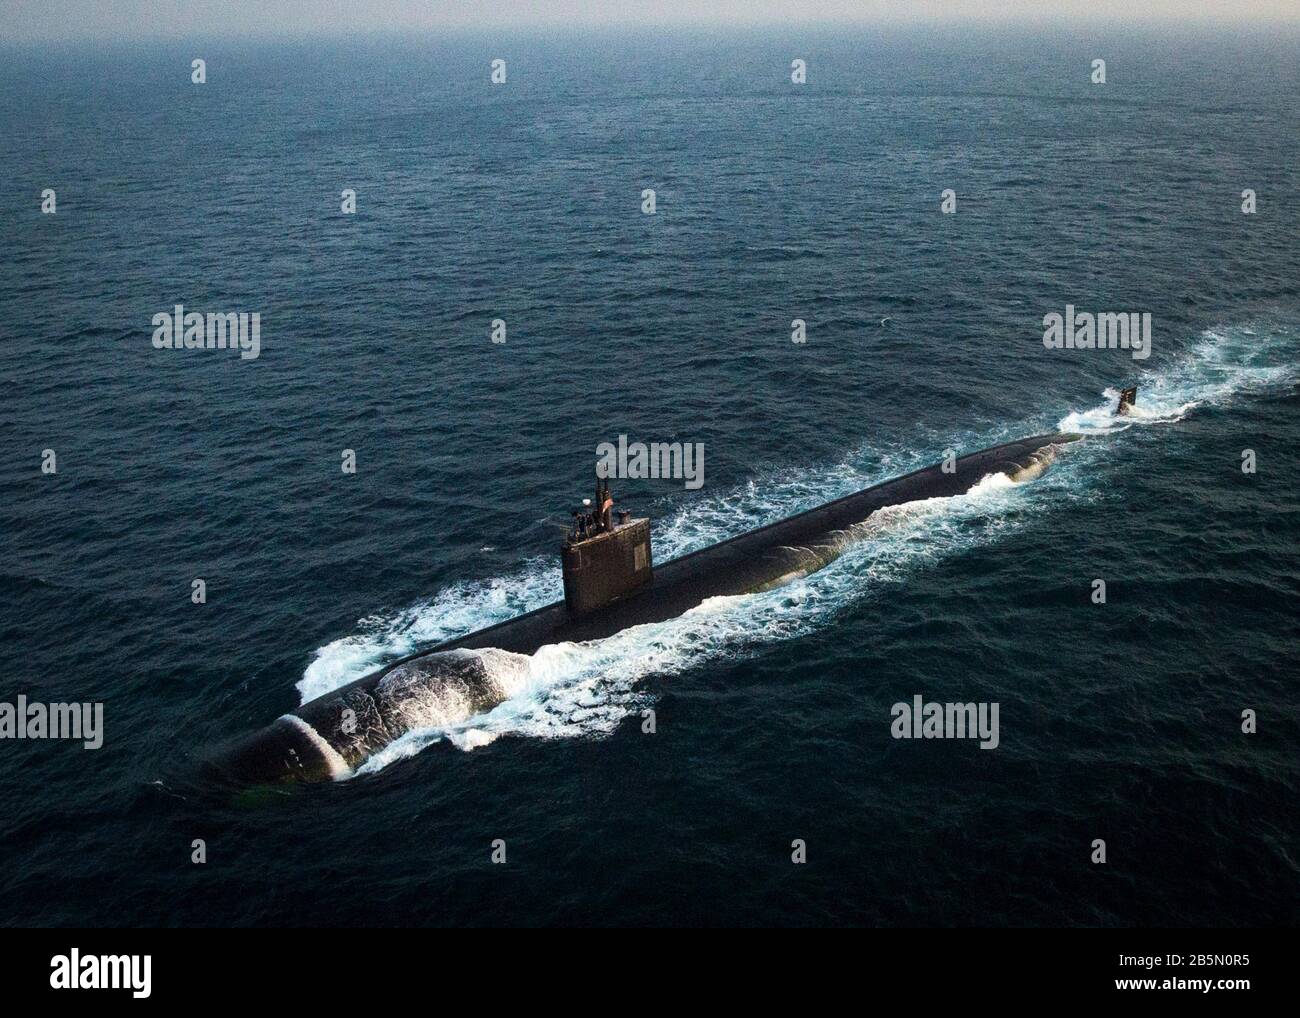 The U.S. Navy Los Angeles-class nuclear-powered attack submarine USS Toledo underway in the Arabian Sea January 21, 2016 off the coast of Bahrain. Stock Photo